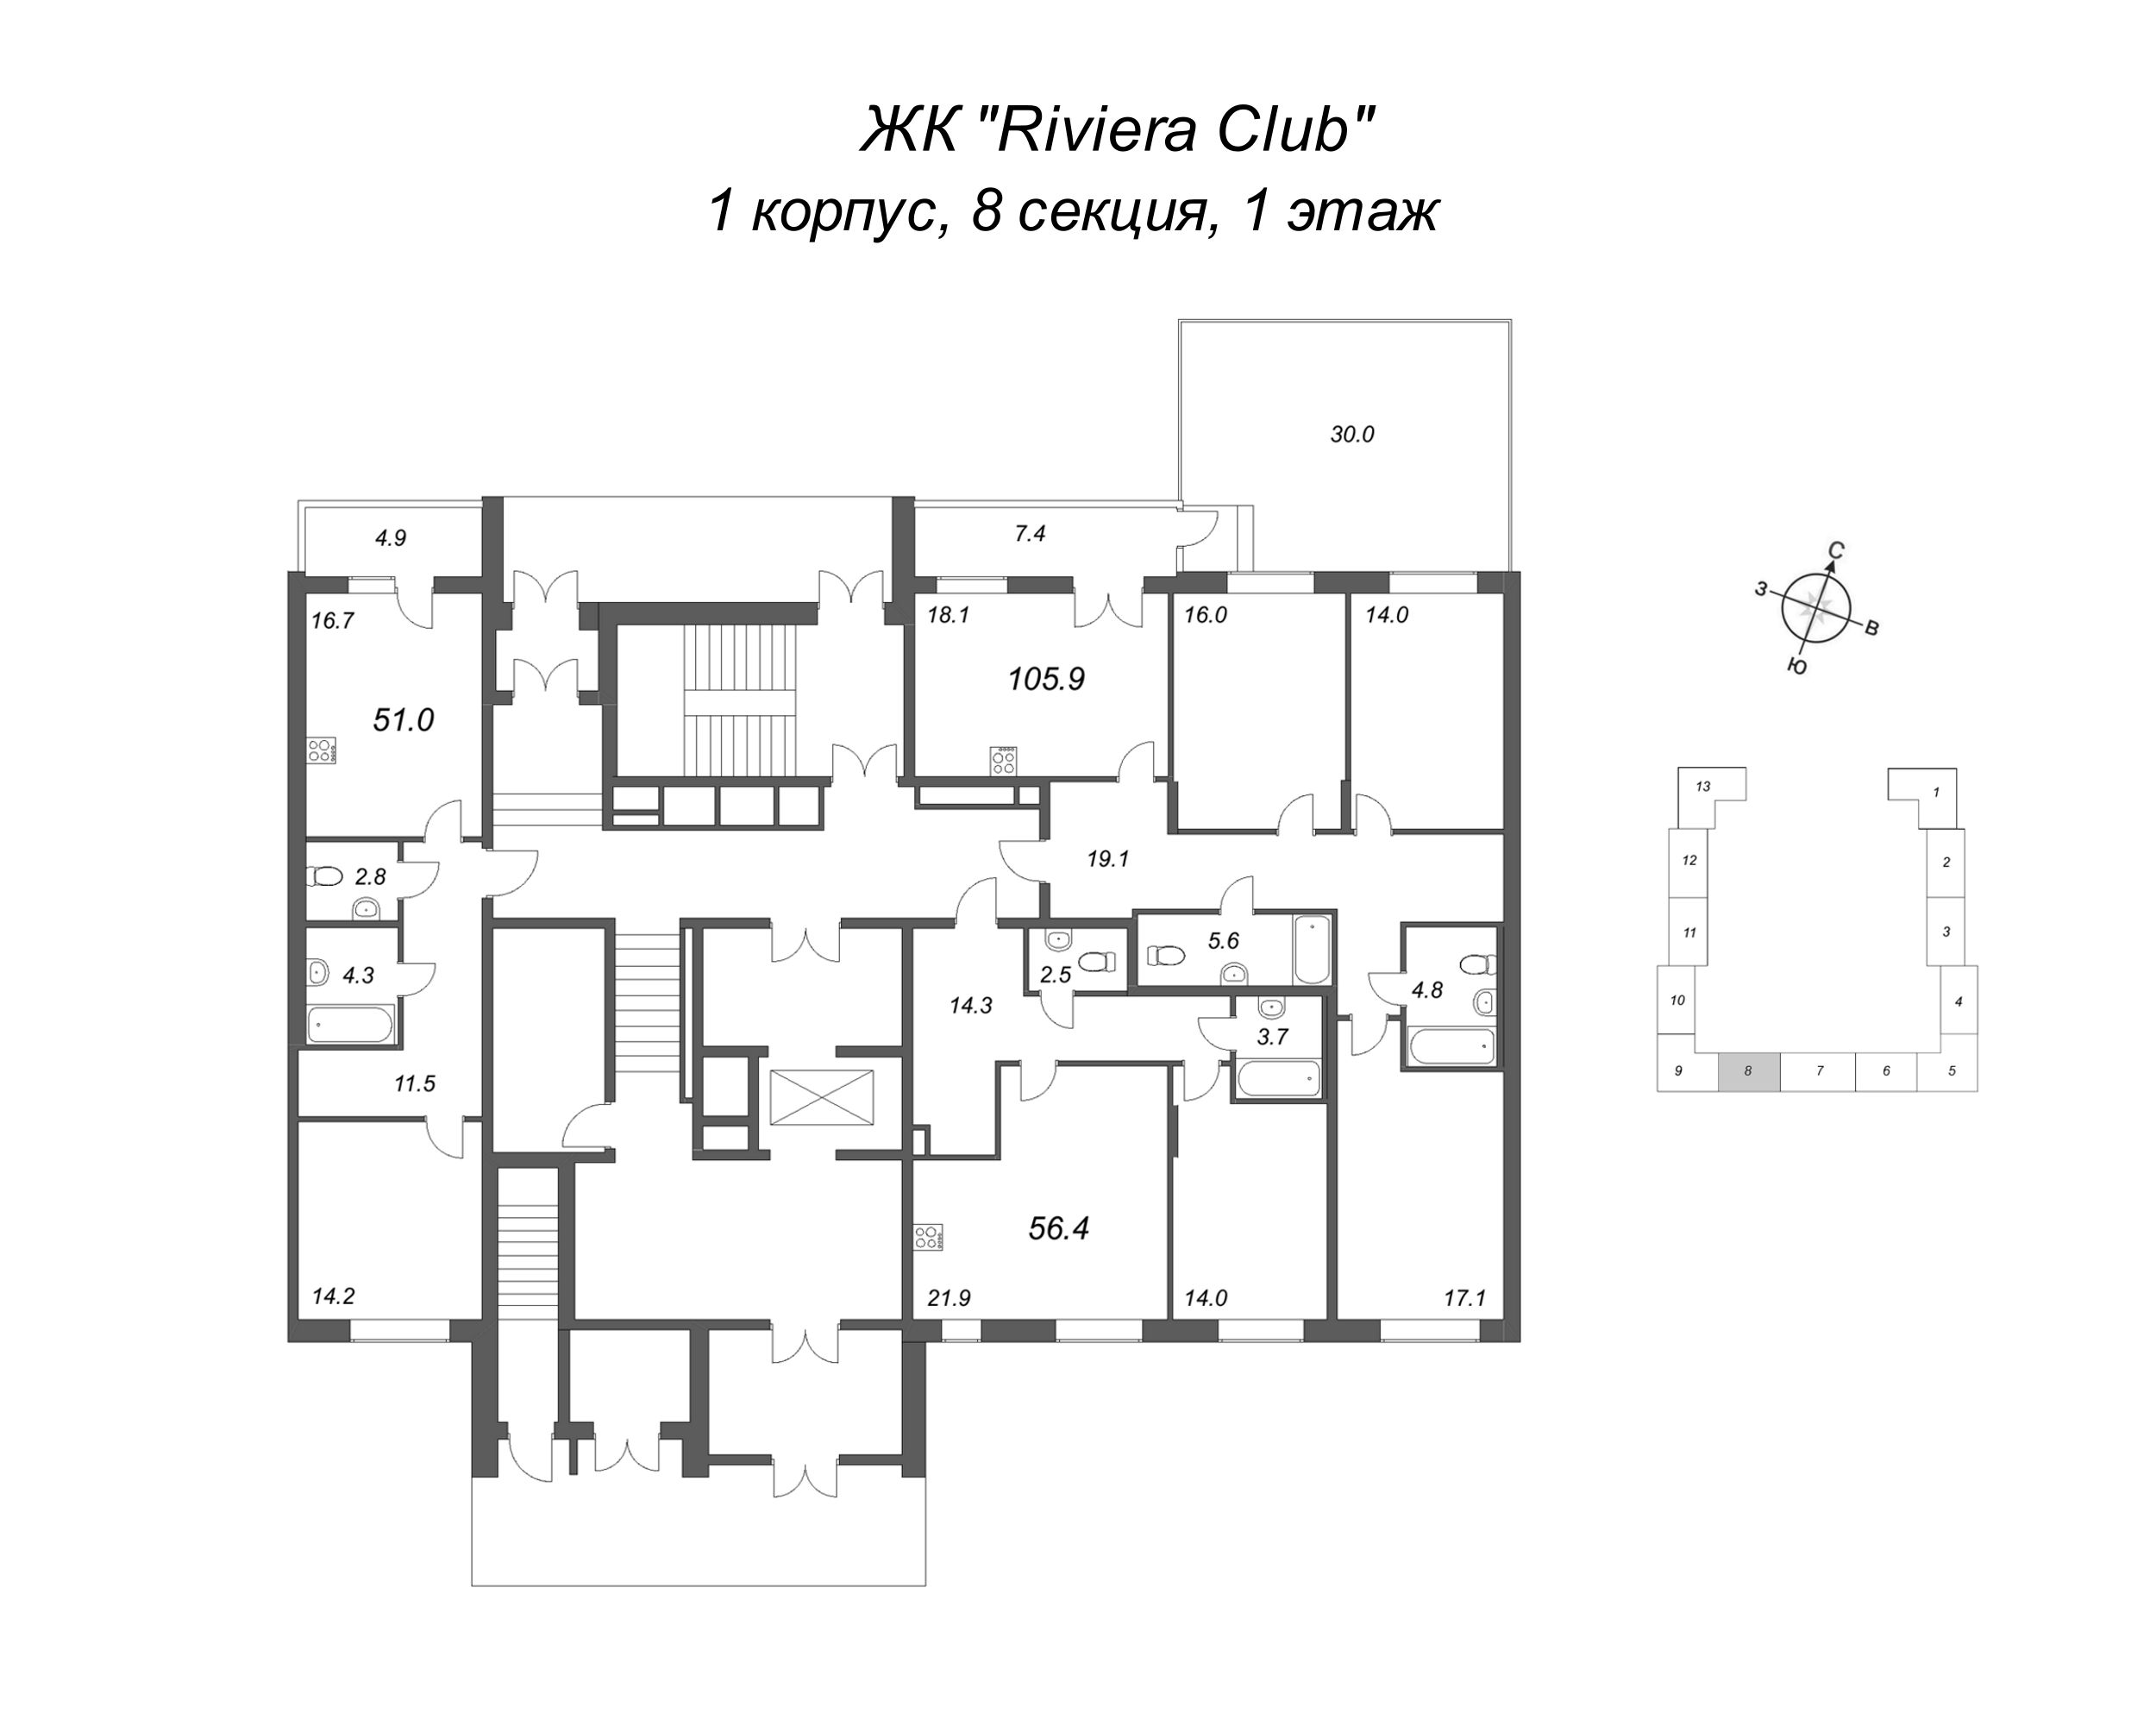 4-комнатная (Евро) квартира, 105.9 м² в ЖК "Riviera Club" - планировка этажа